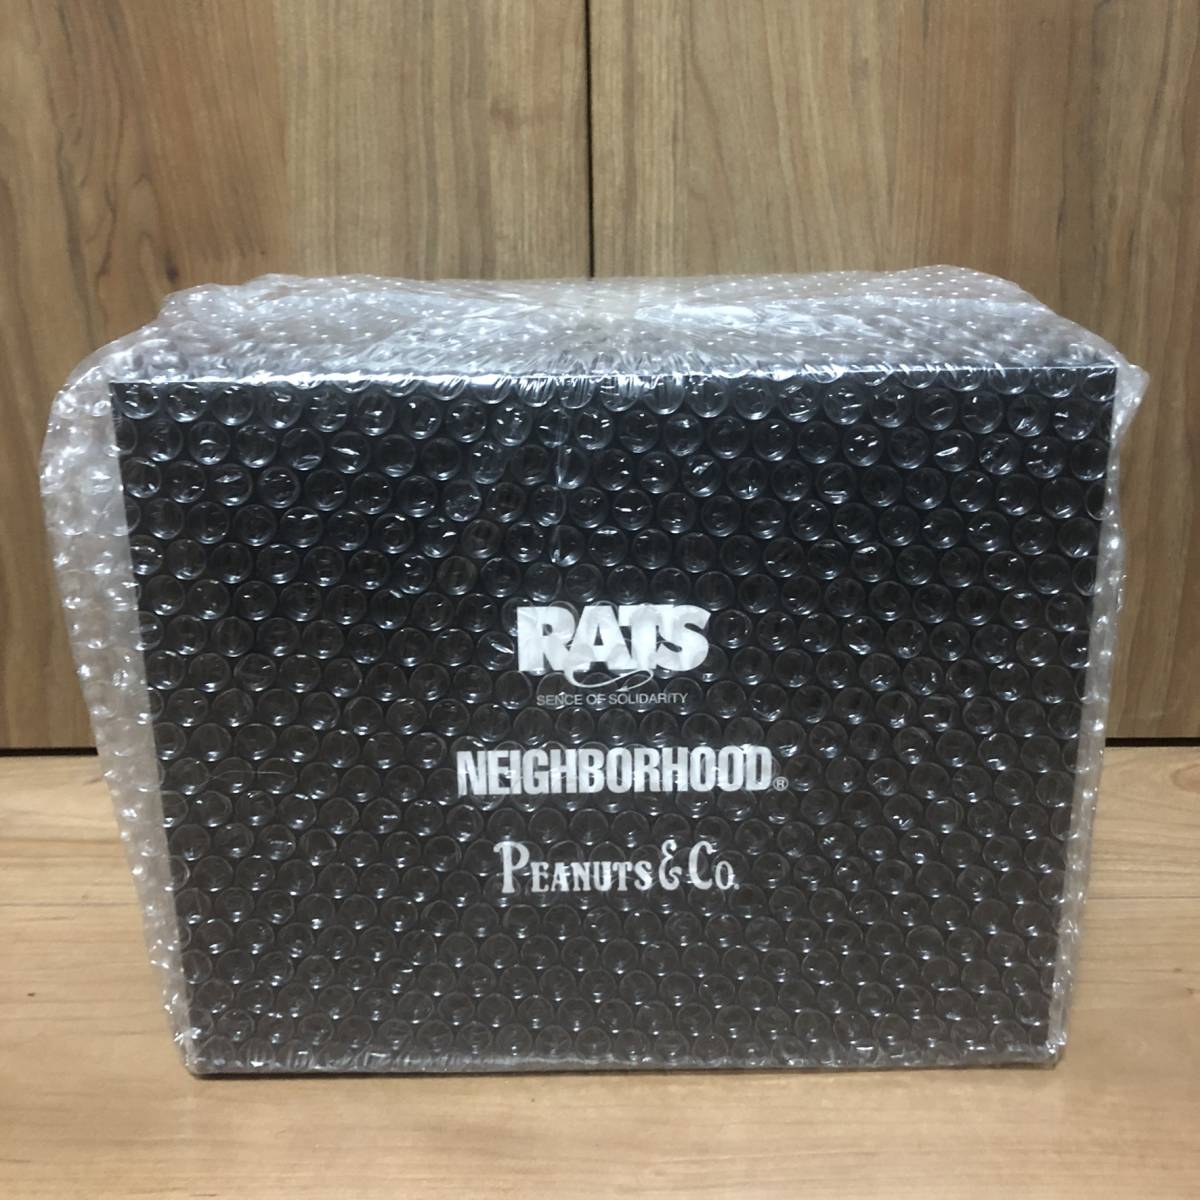 RATS x NEIGHBORHOOD x PEANUTS & Co. ネイバーフッド ラッツ 